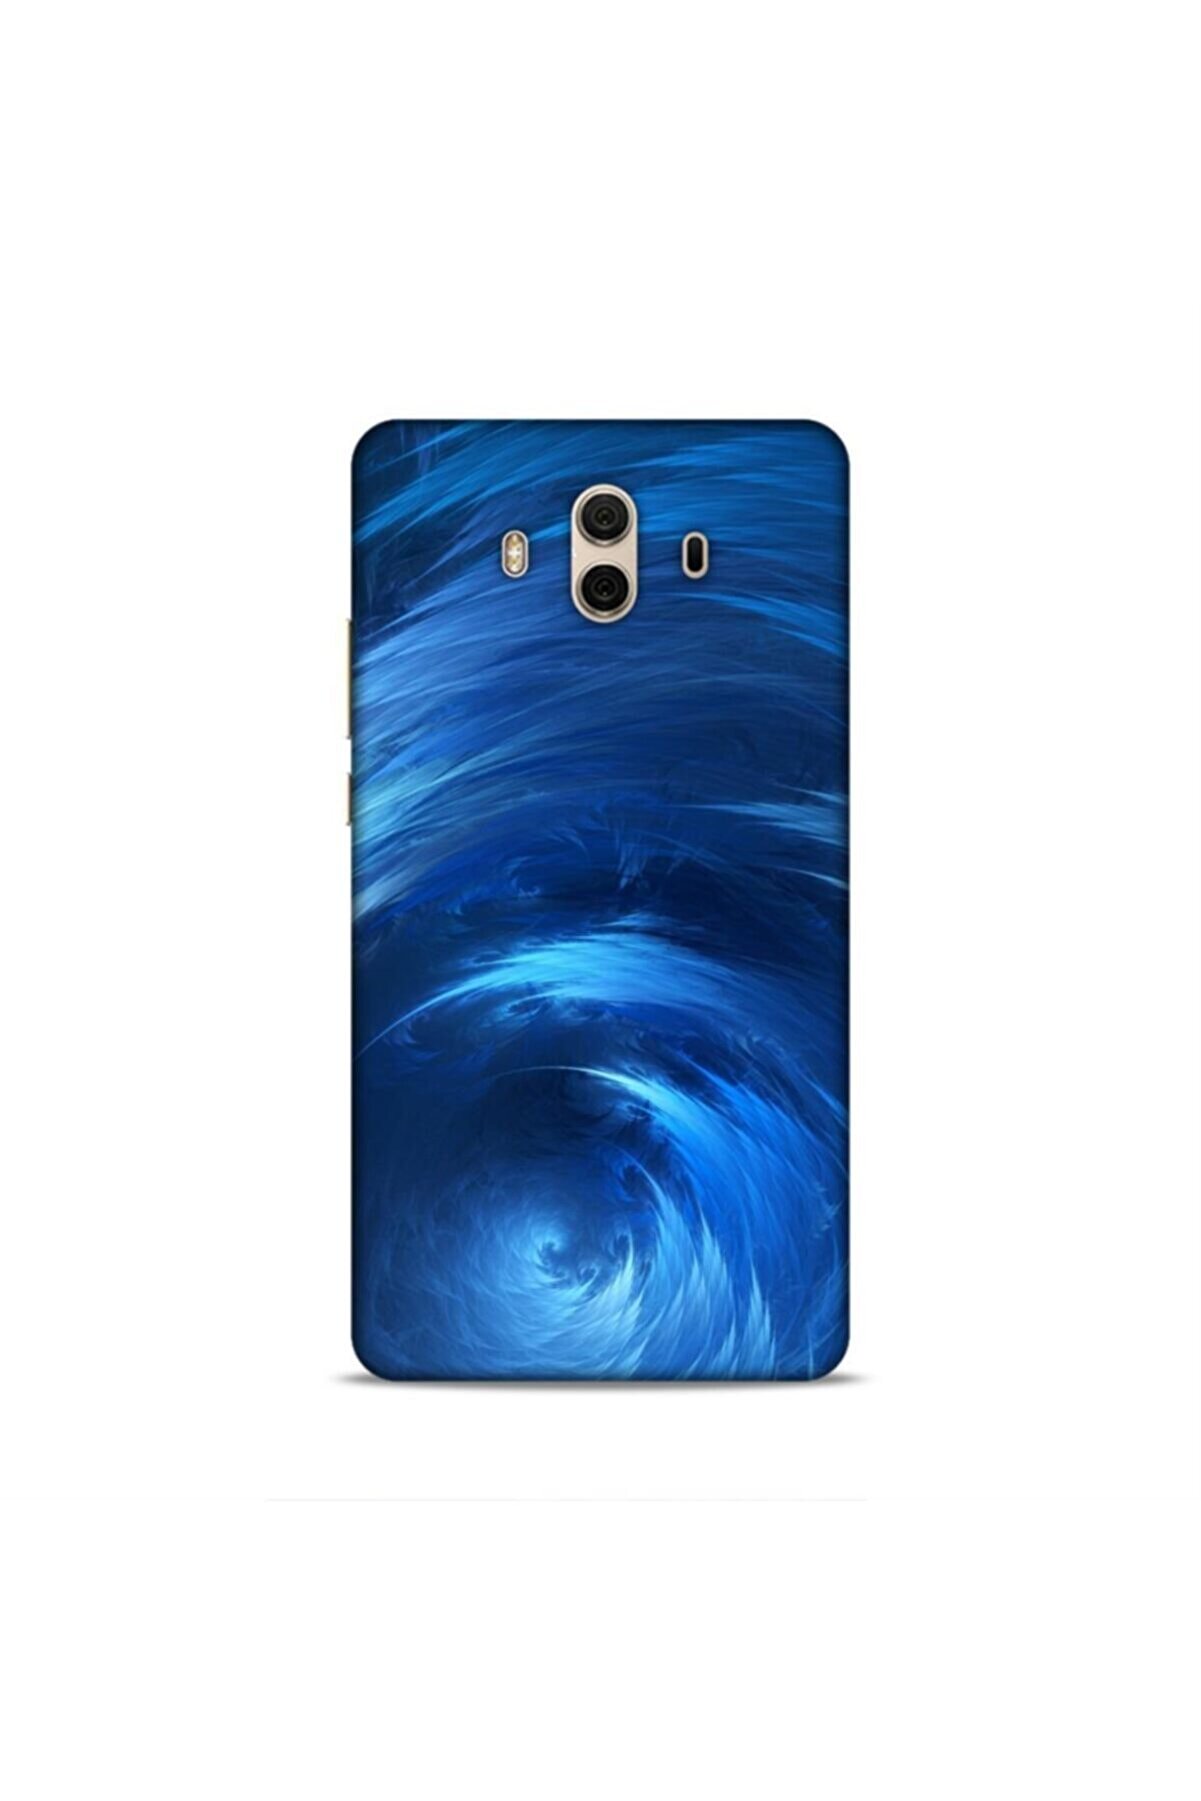 Pickcase Huawei Mate 10 Kılıf Desenli Arka Kapak Mavi Dalga